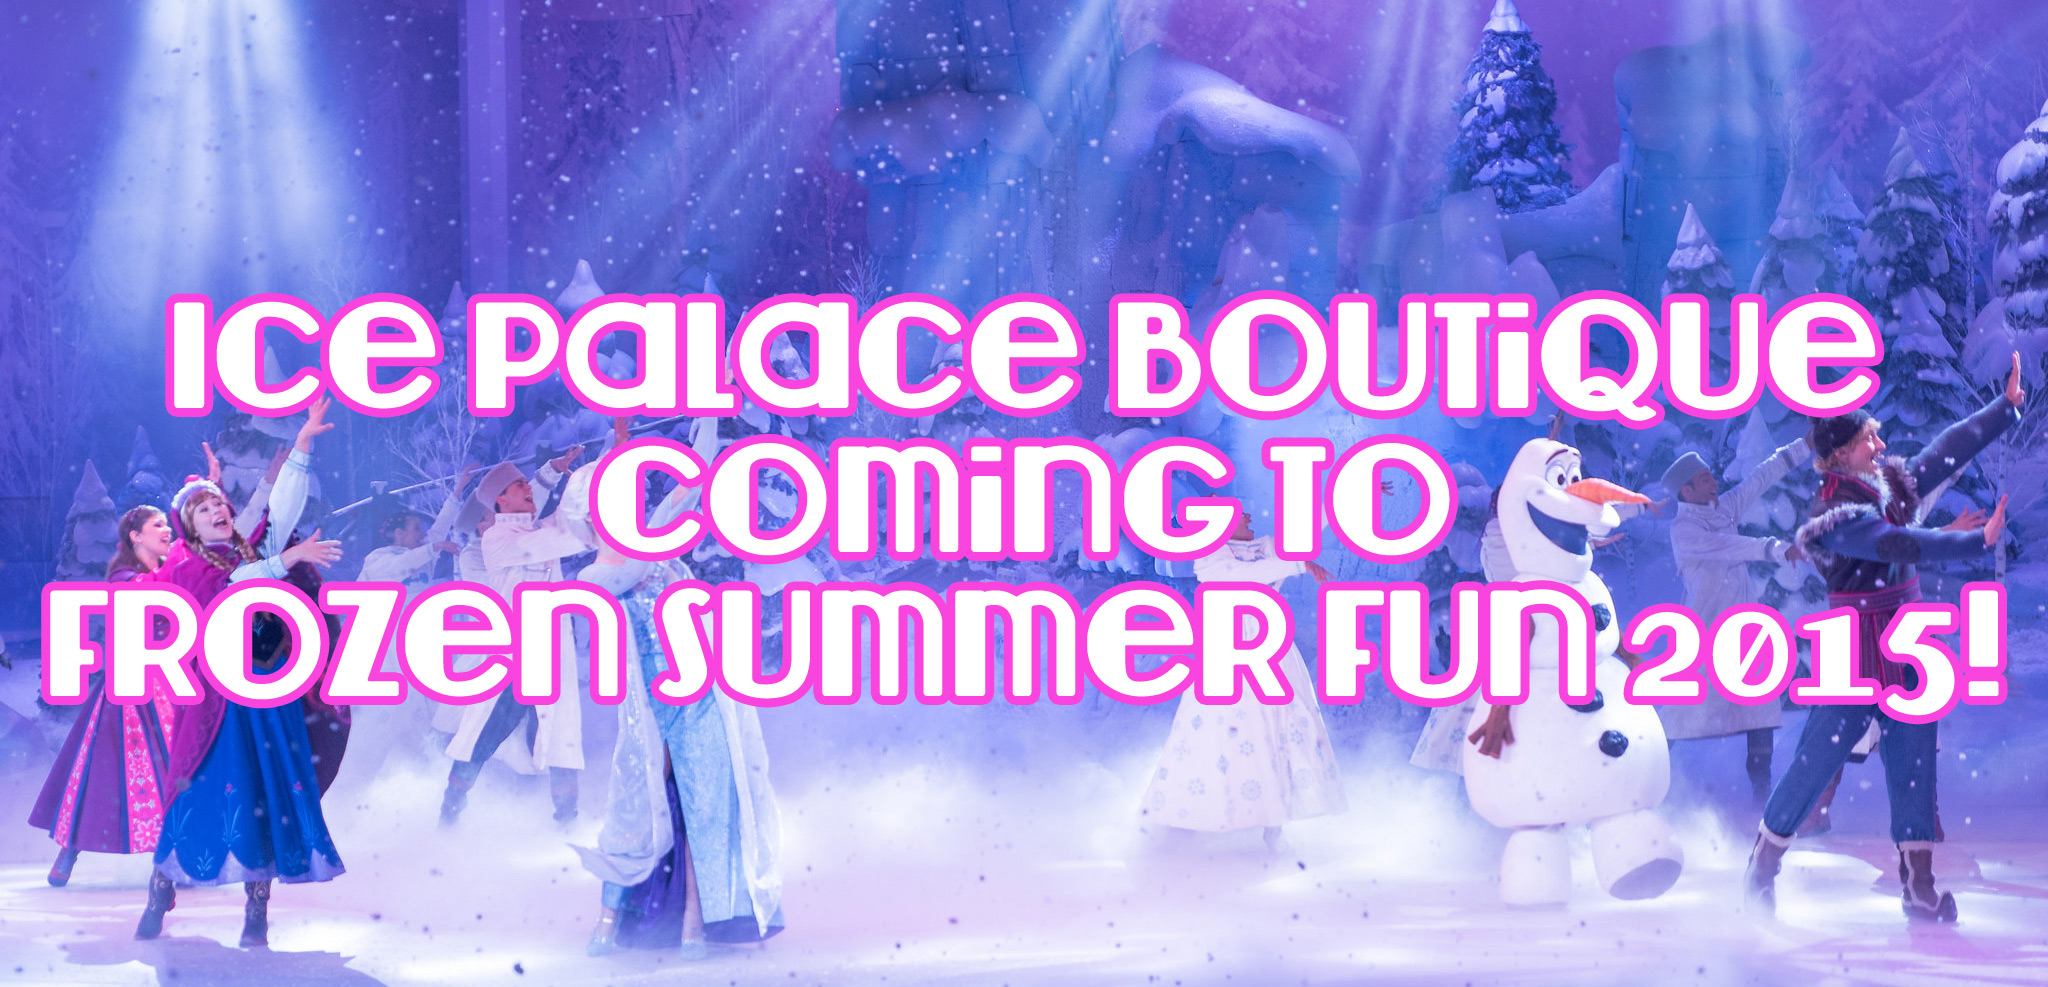 Disney’s Ice Palace Boutique